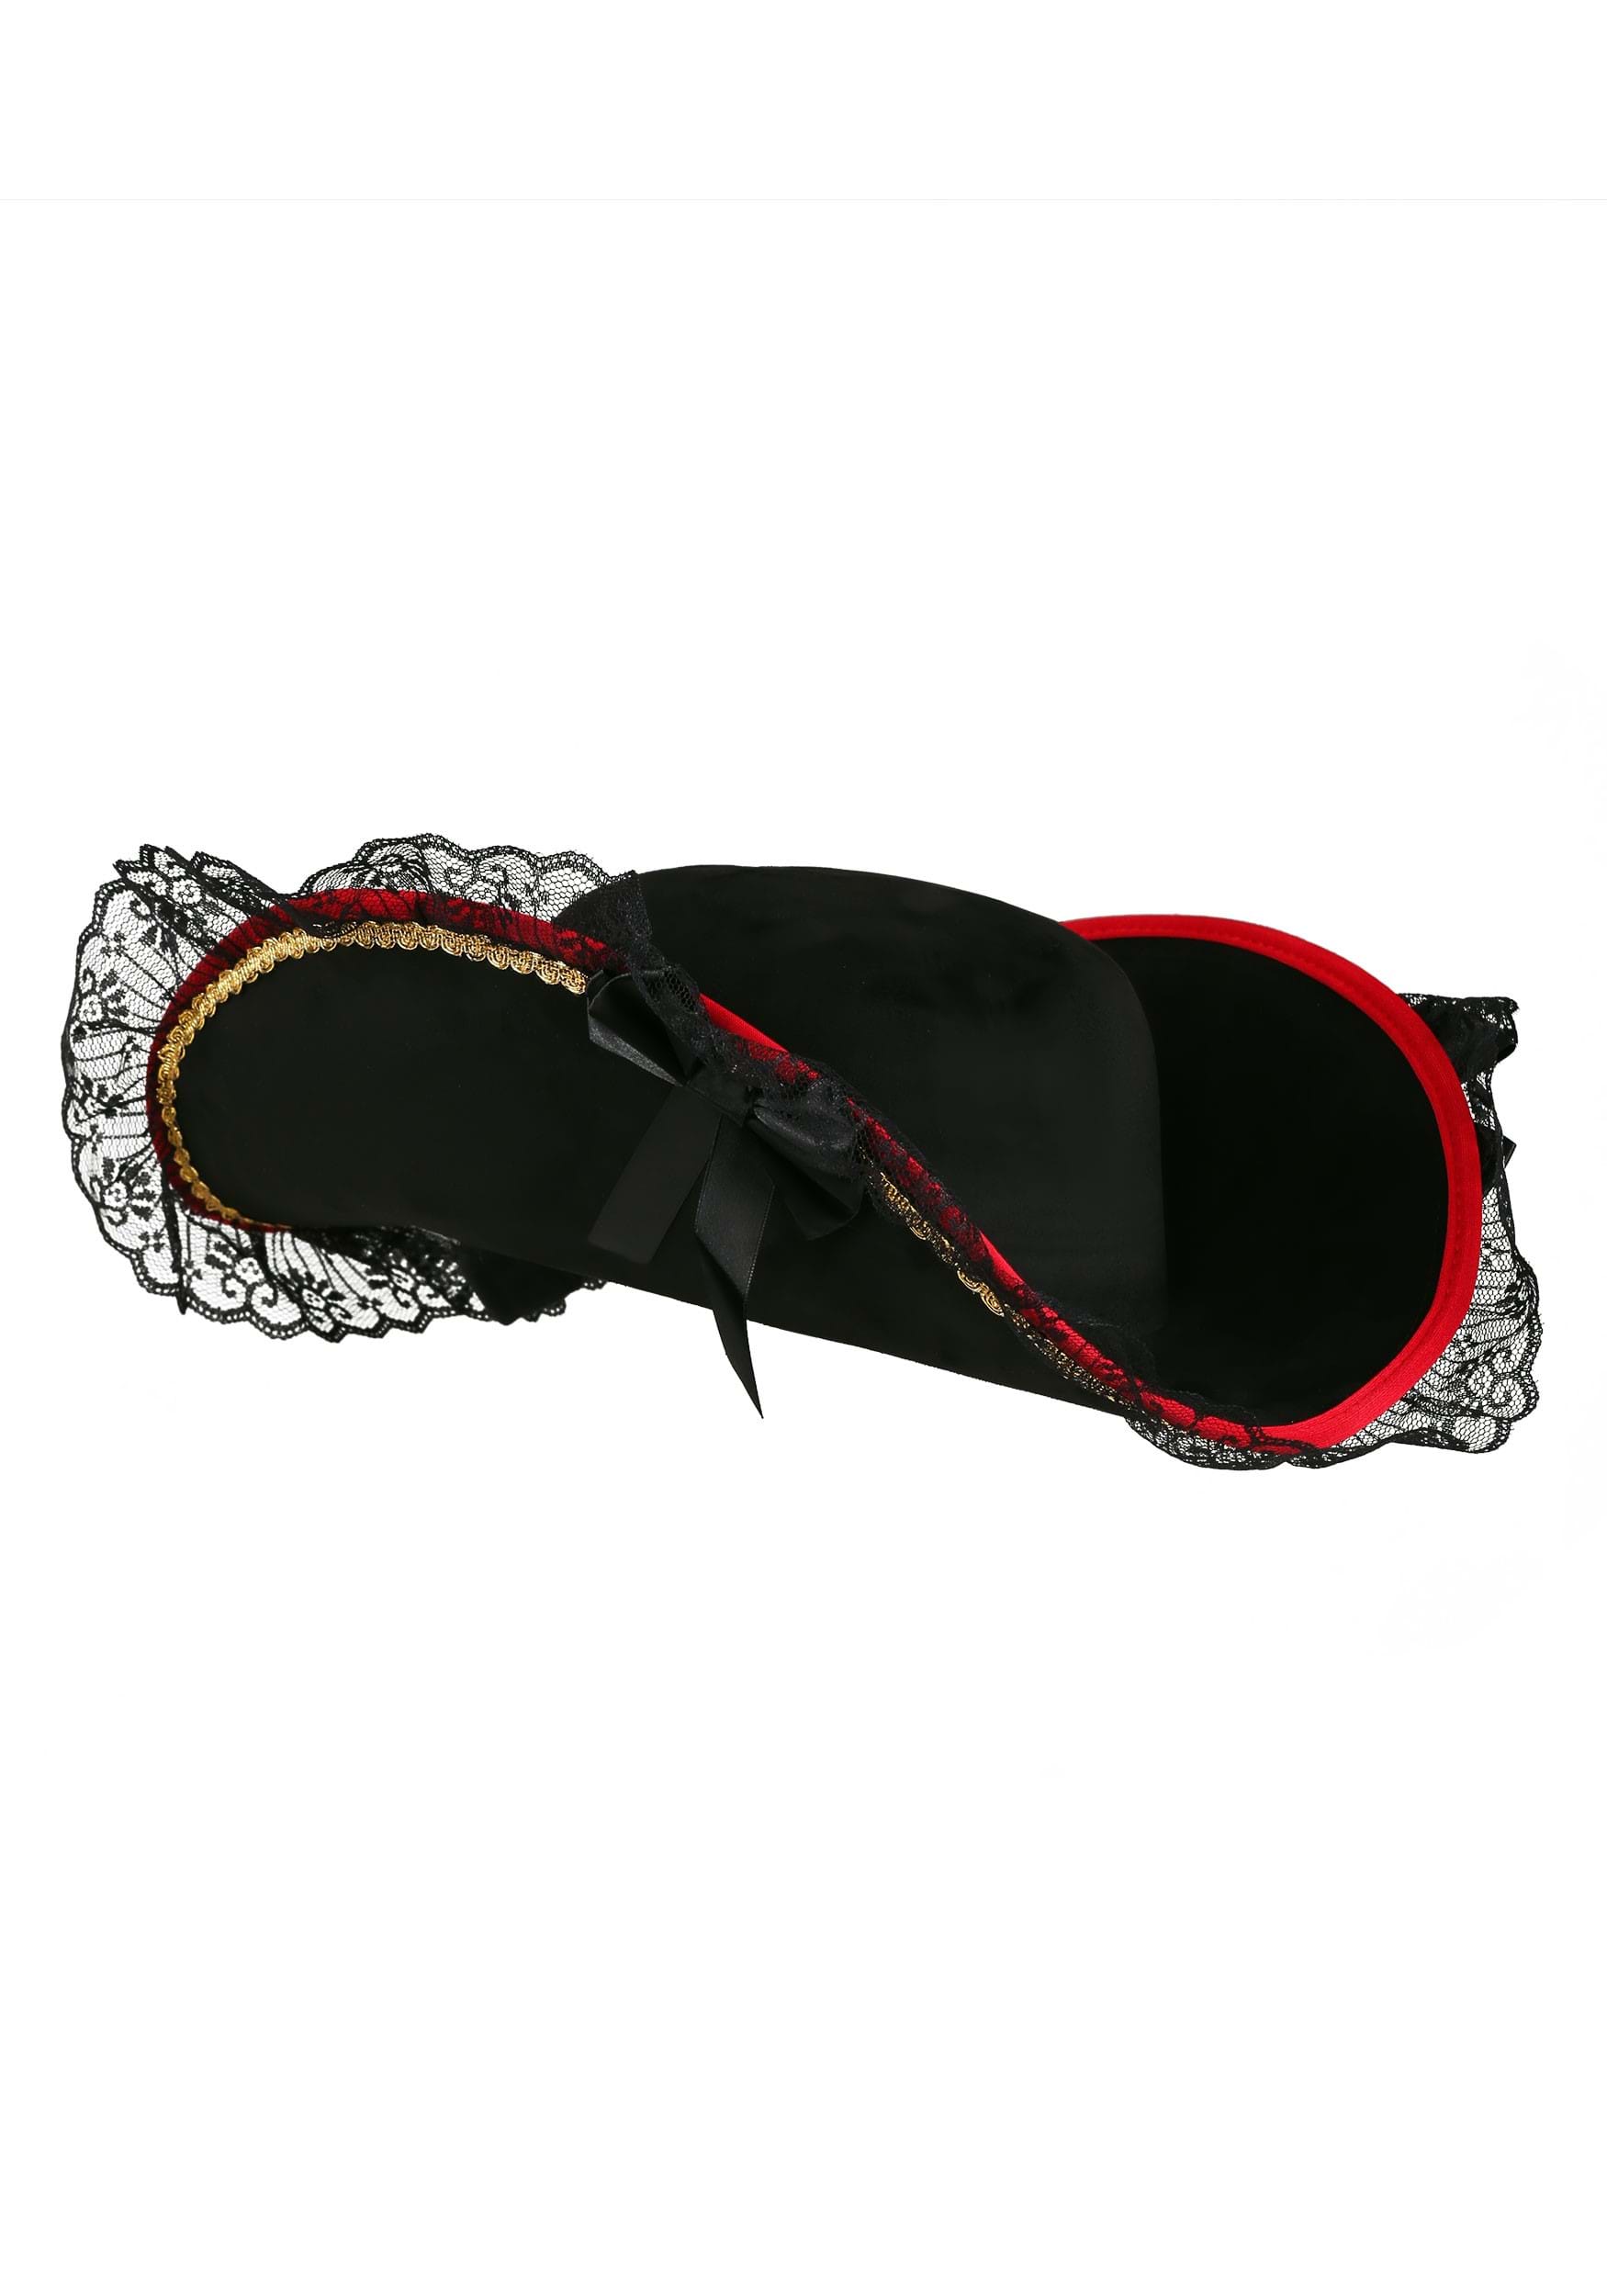 Lady Buccaneer Black Costume Hat Accessory